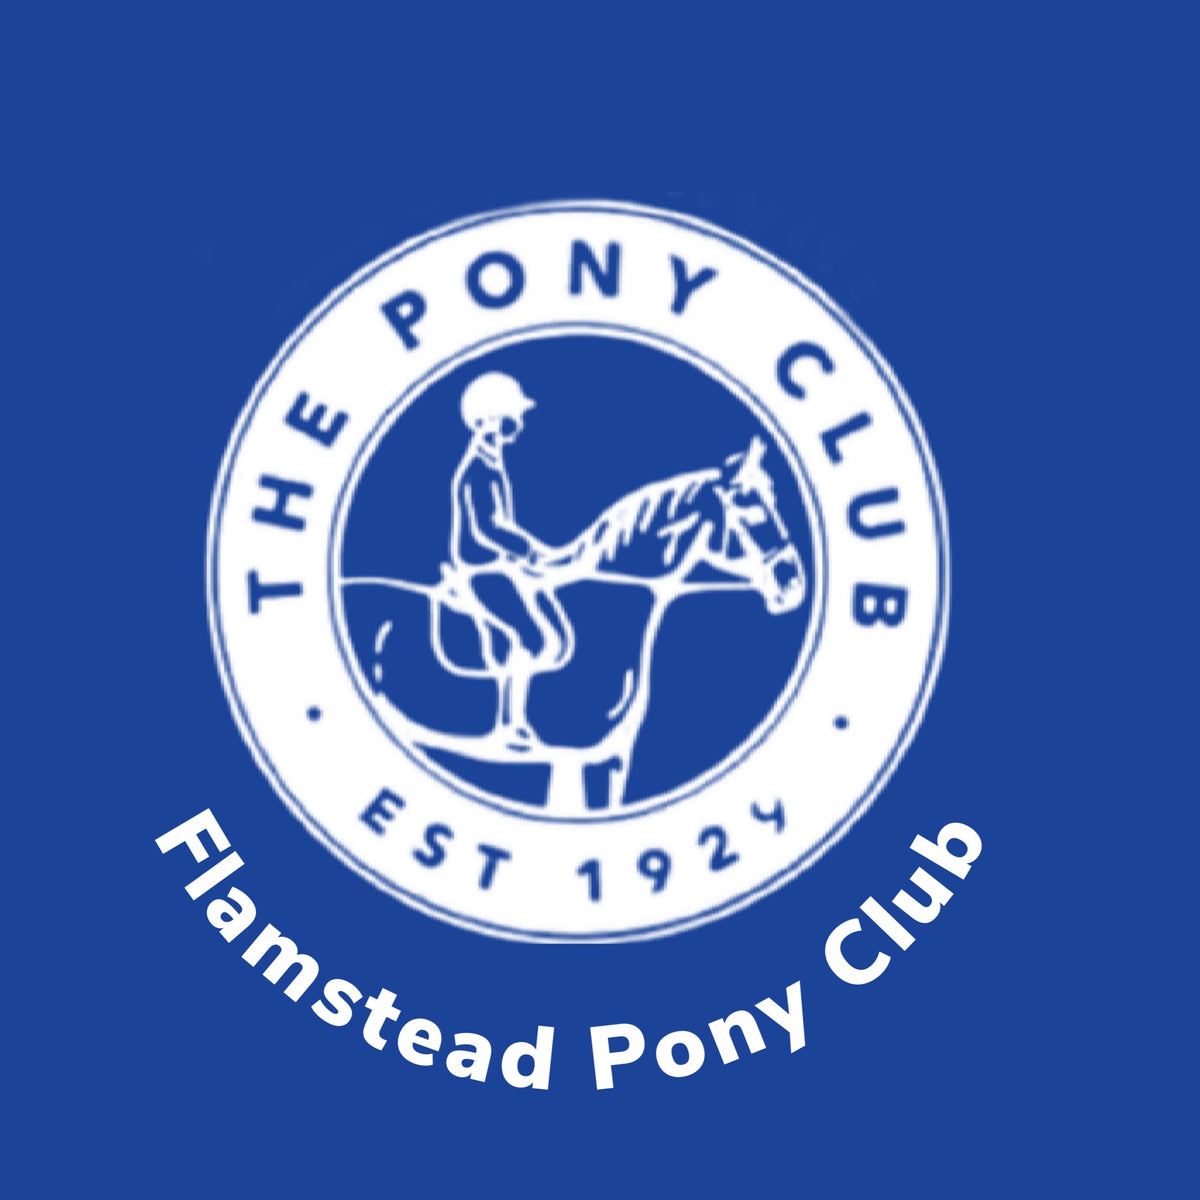 Flamstead Pony Club